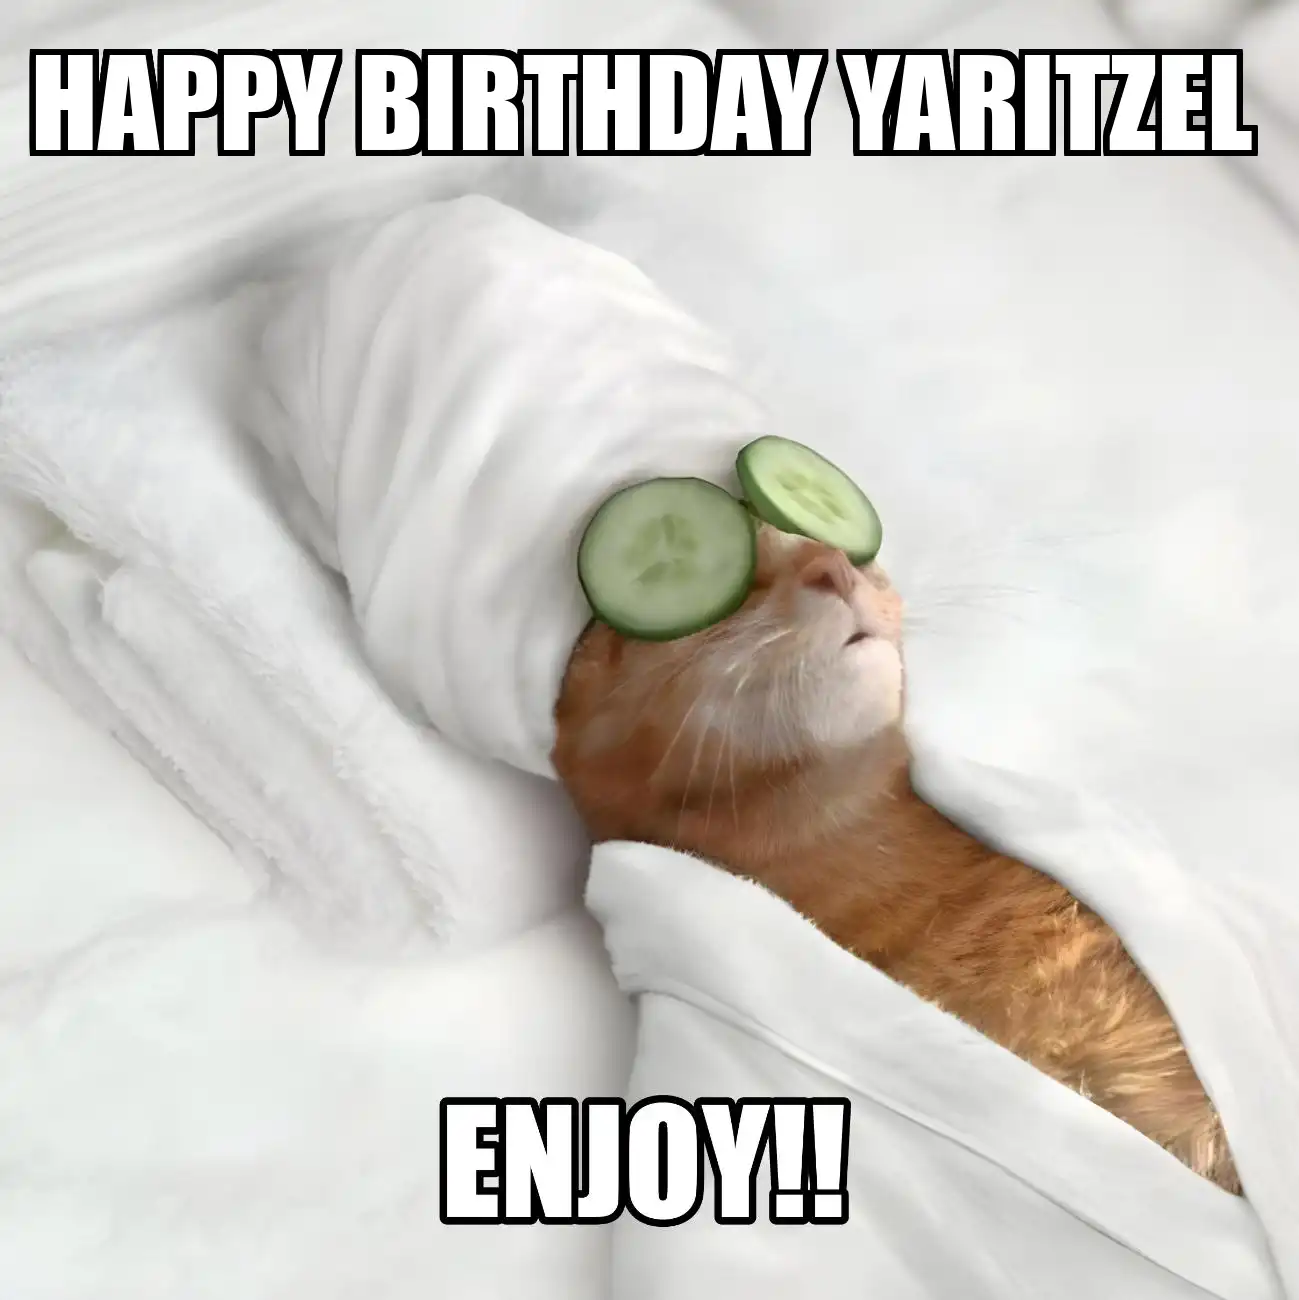 Happy Birthday Yaritzel Enjoy Cat Meme